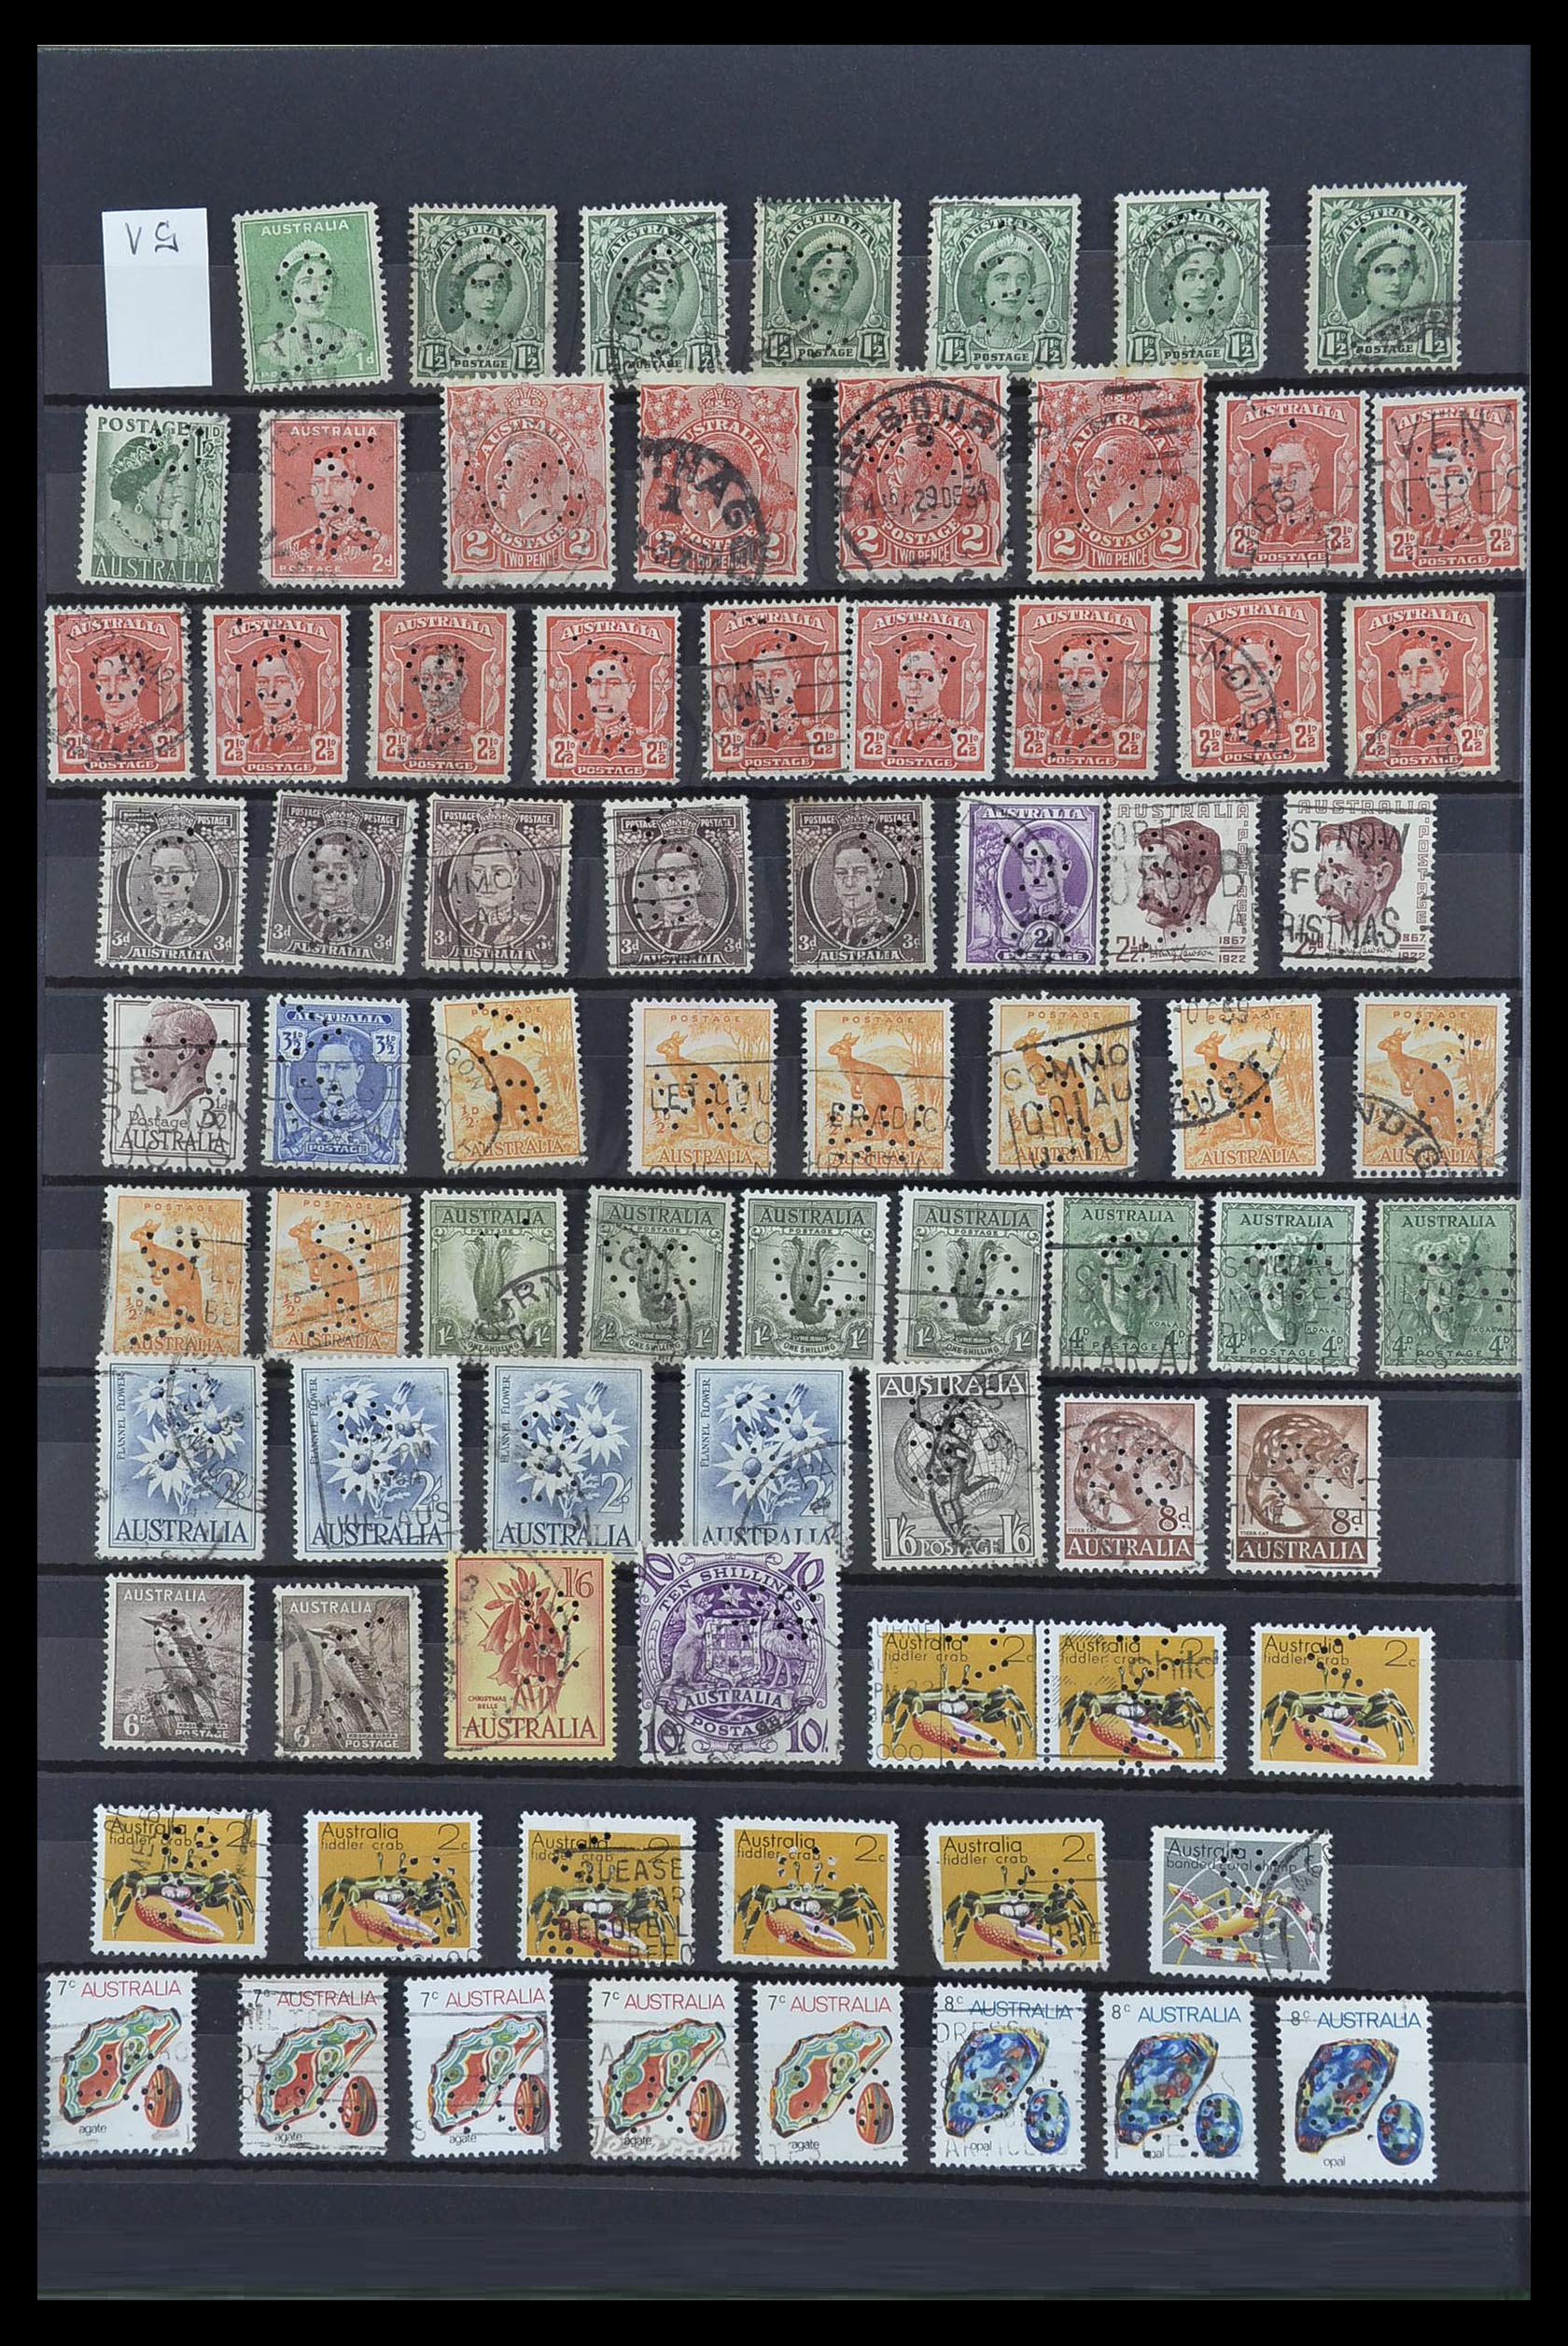 33510 002 - Stamp collection 33510 Australia perfins 1900-1970.